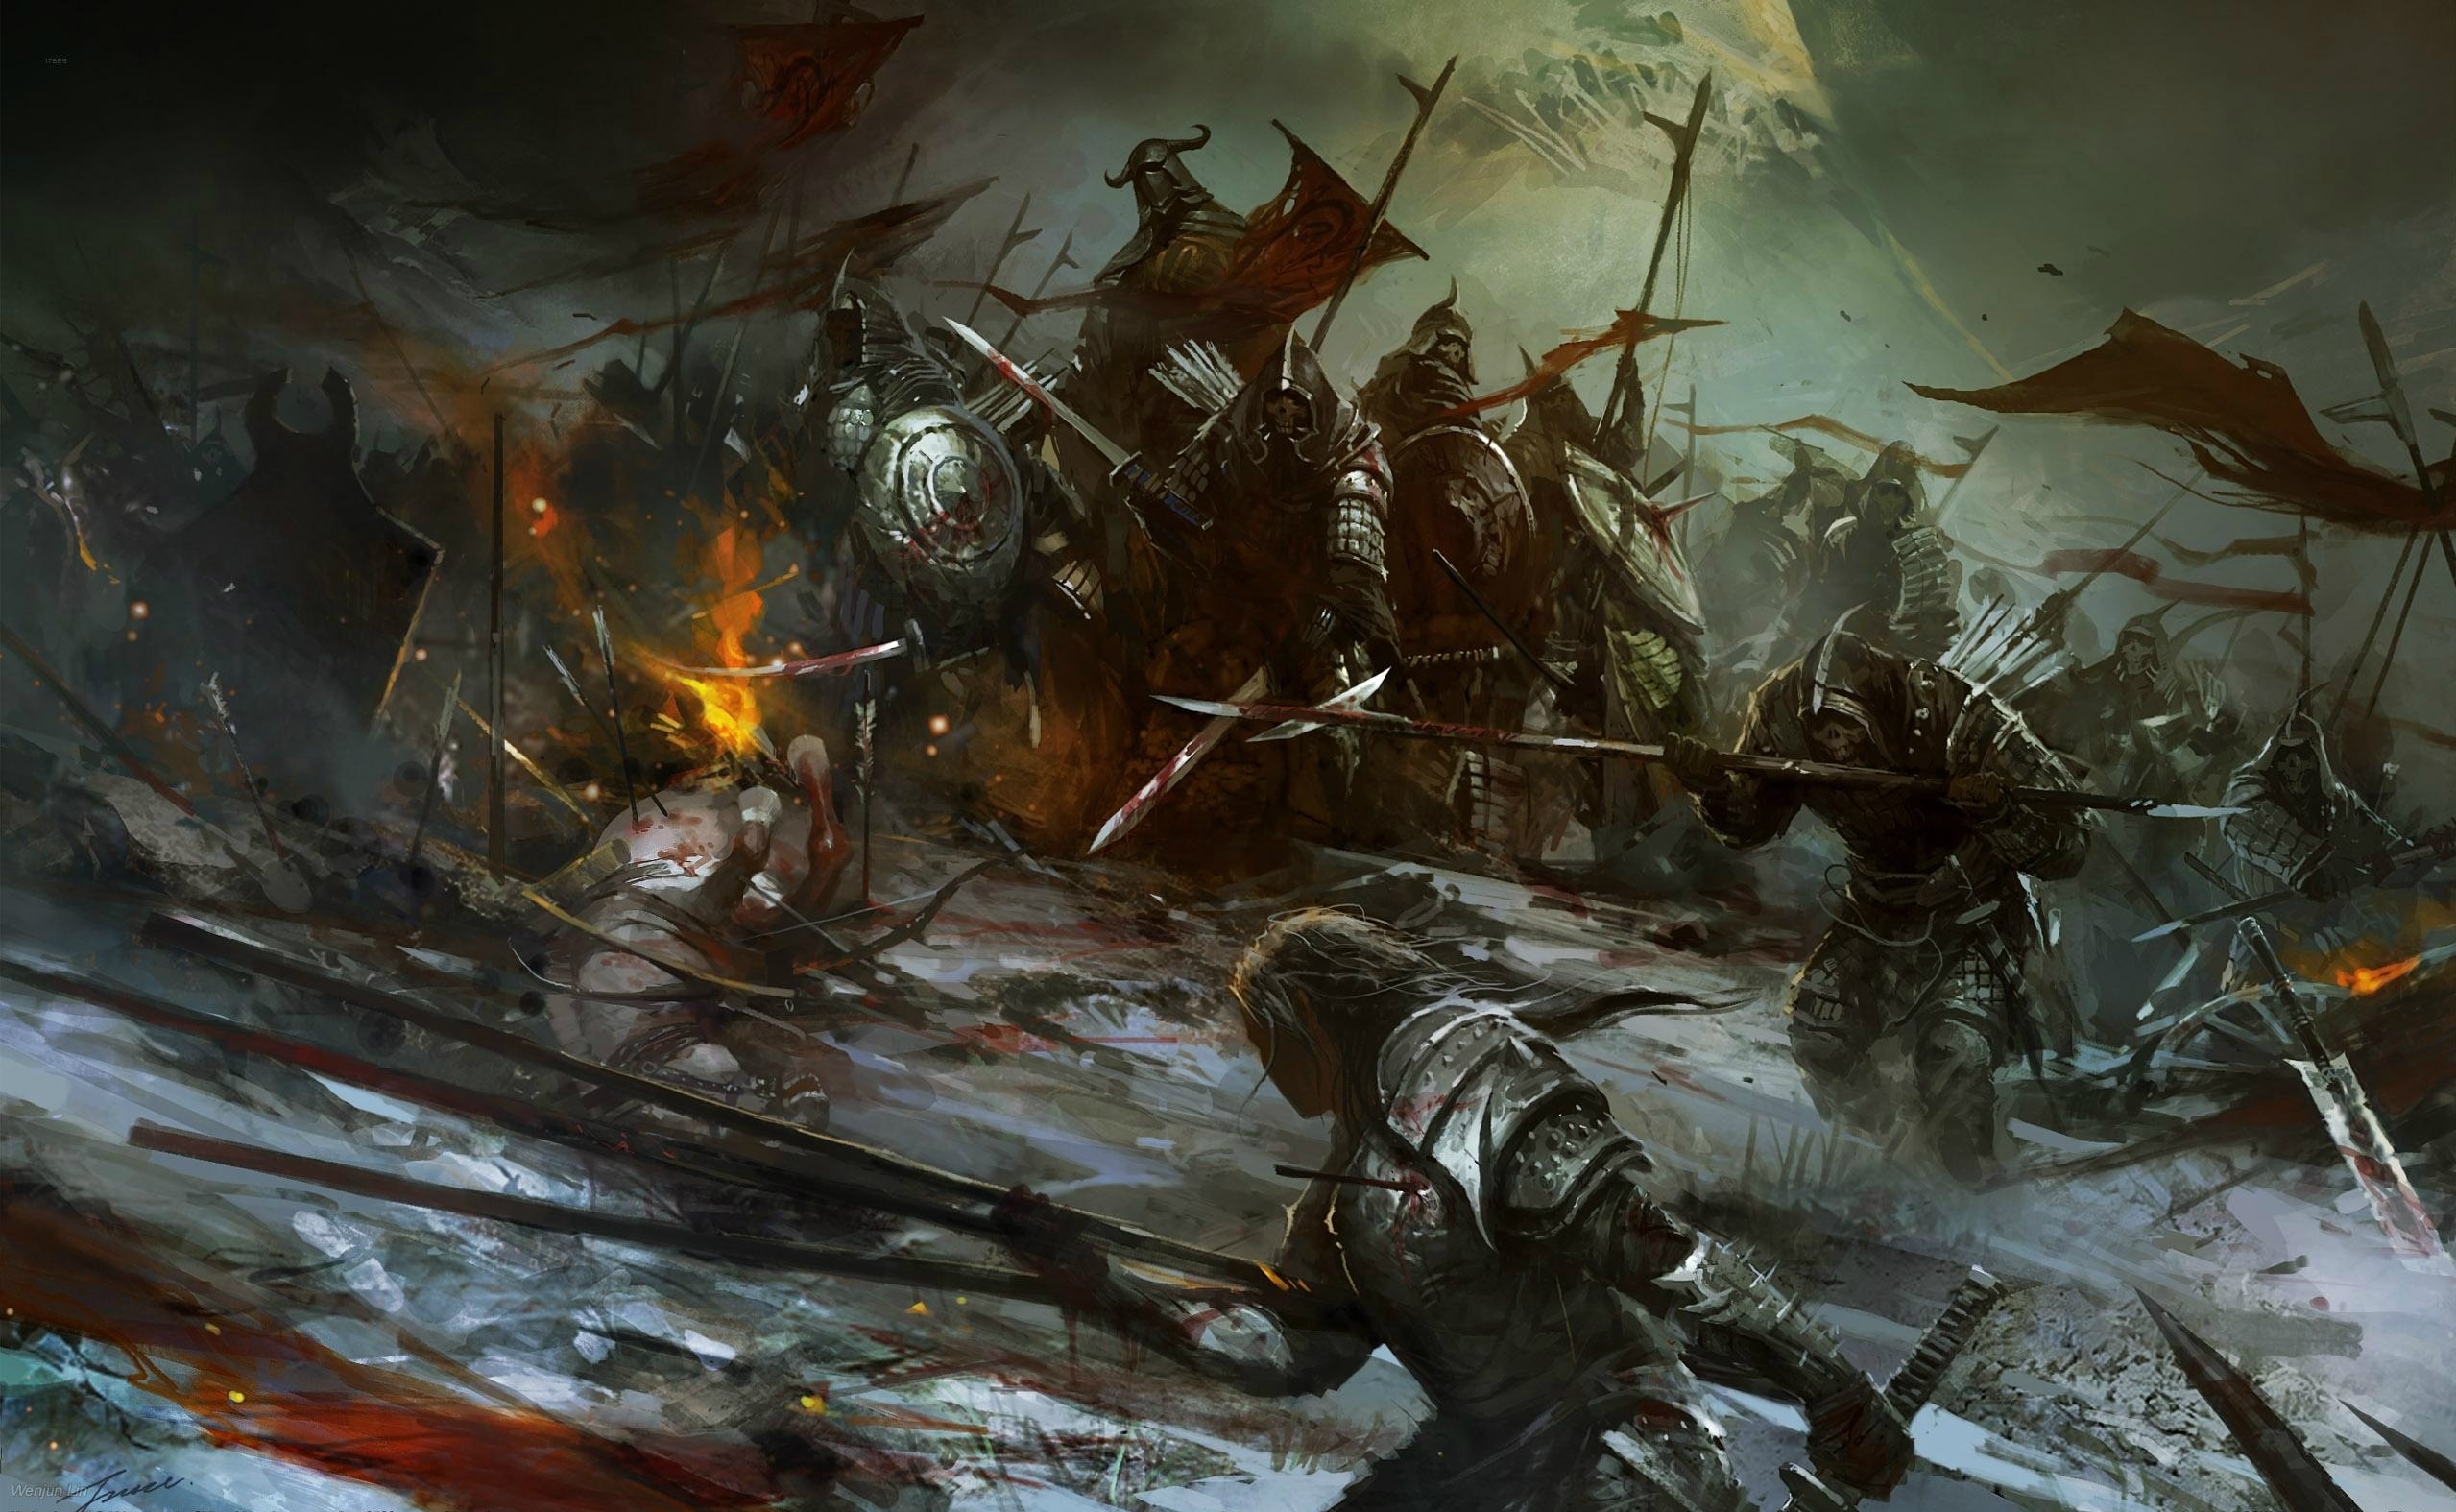 Steam Workshop::Demon's Souls Remake Cover Art [Effects, Music]